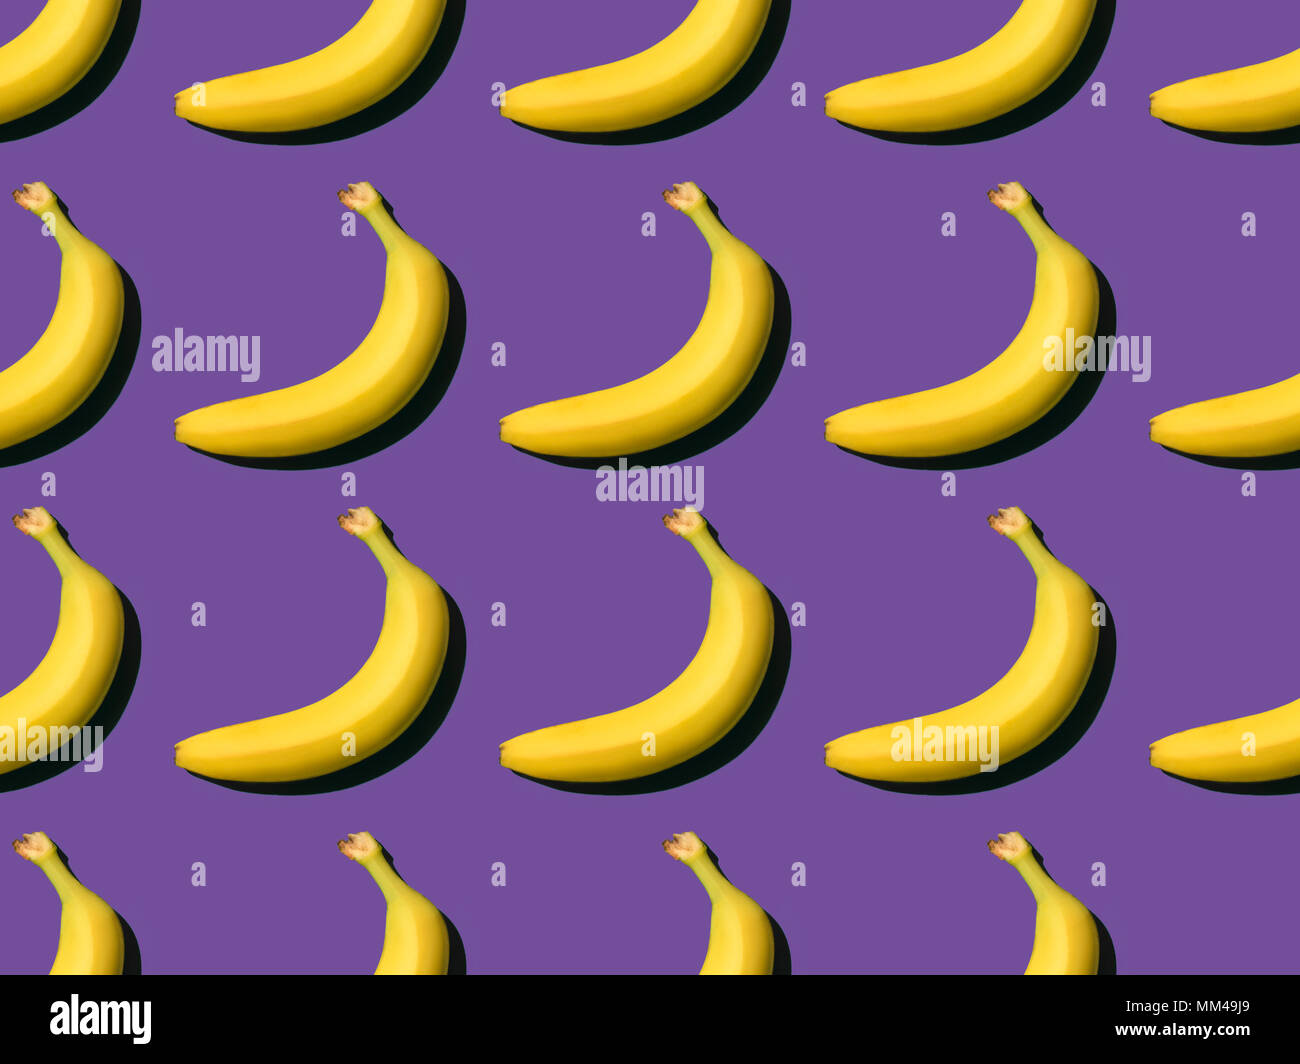 ripe bananas pattern Stock Photo